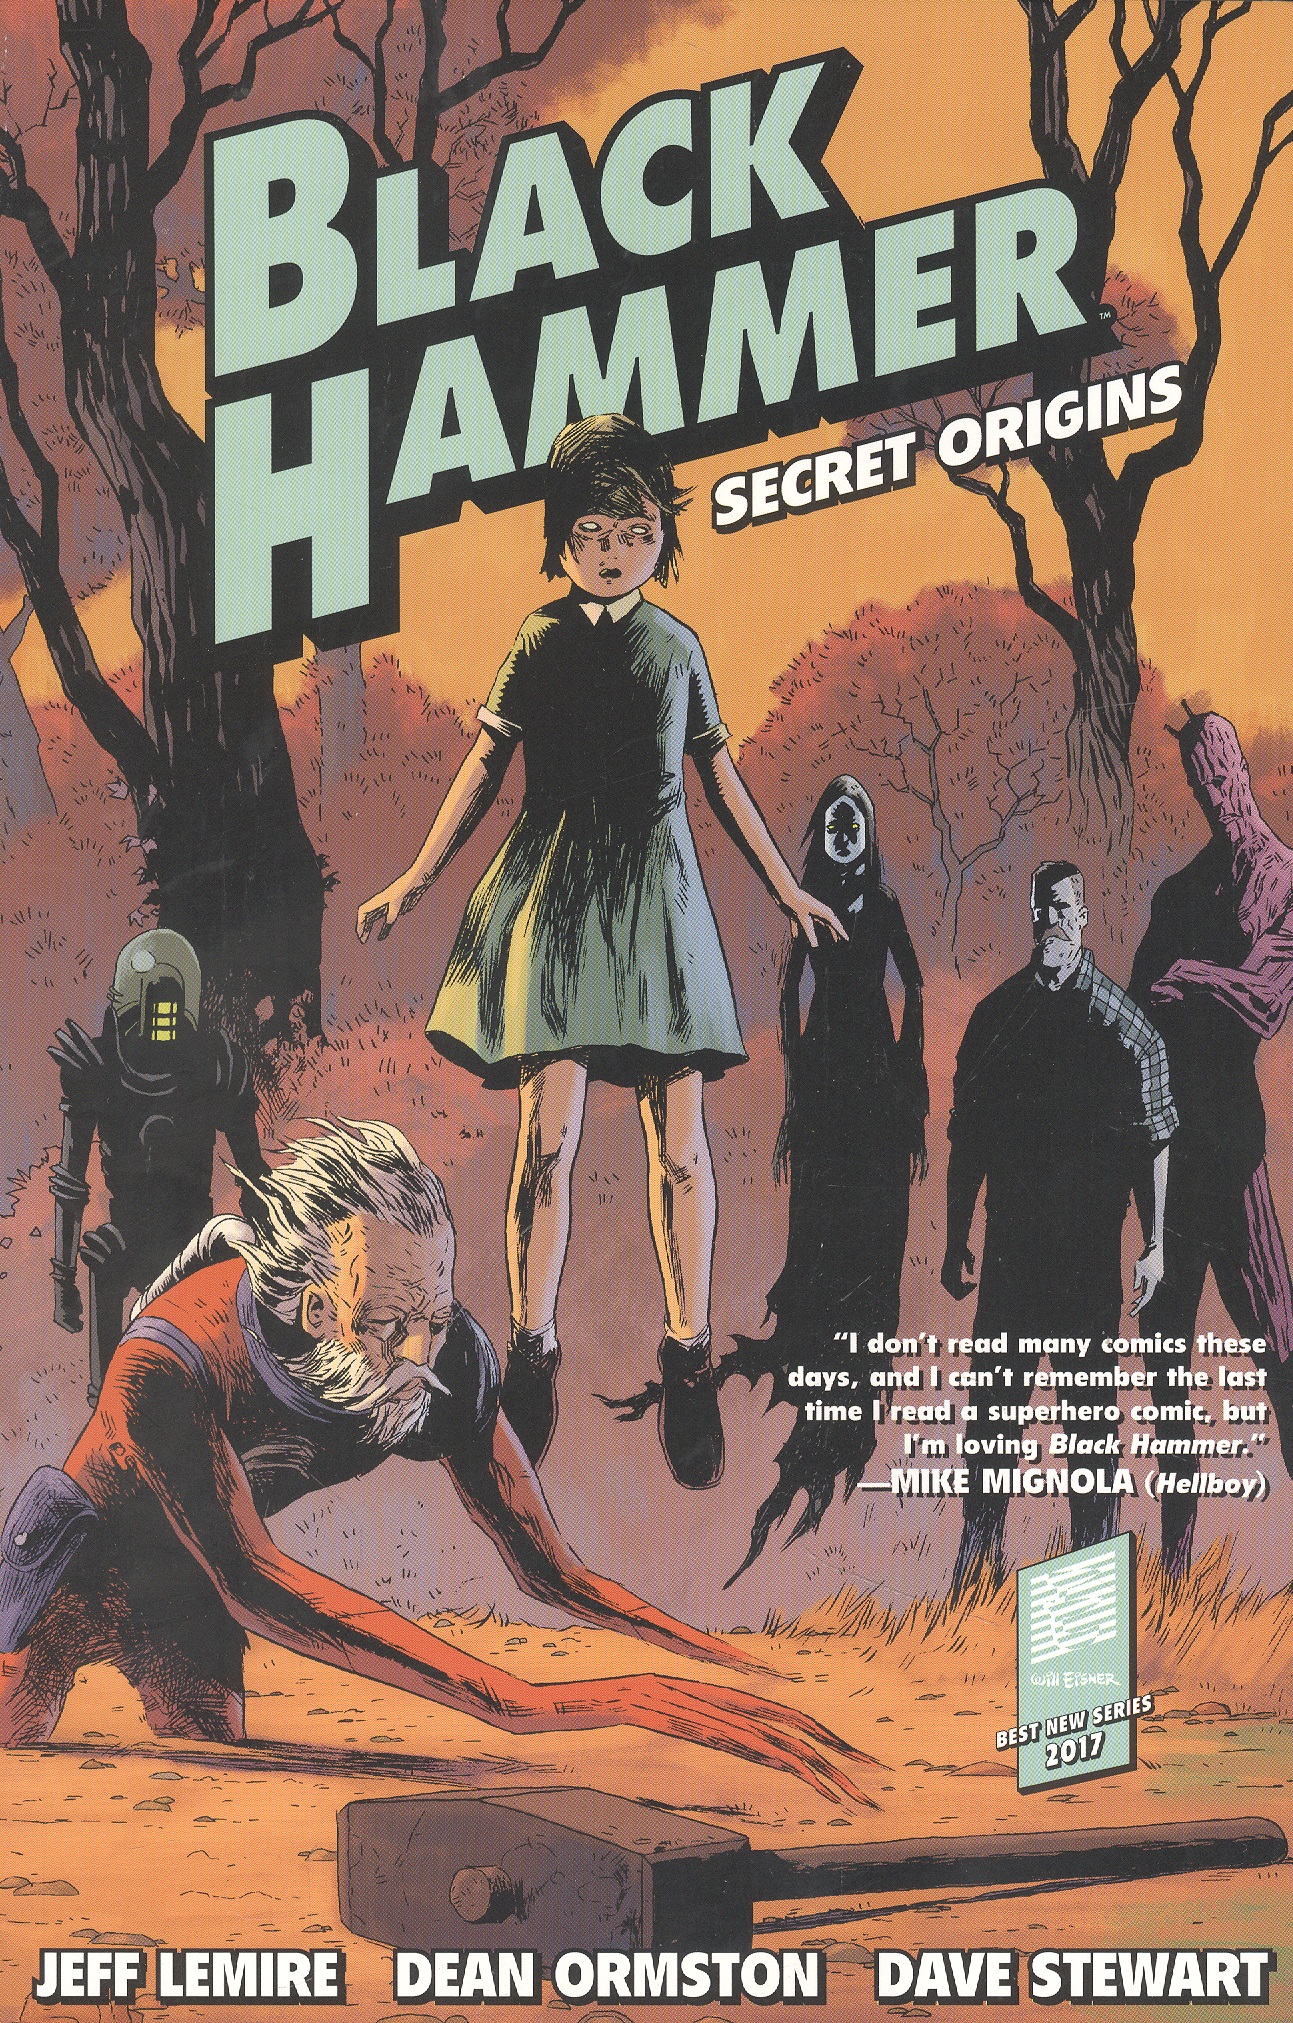 Лемир Джефф Black Hammer: Secret Origins lemire j black hammer streets of spiral